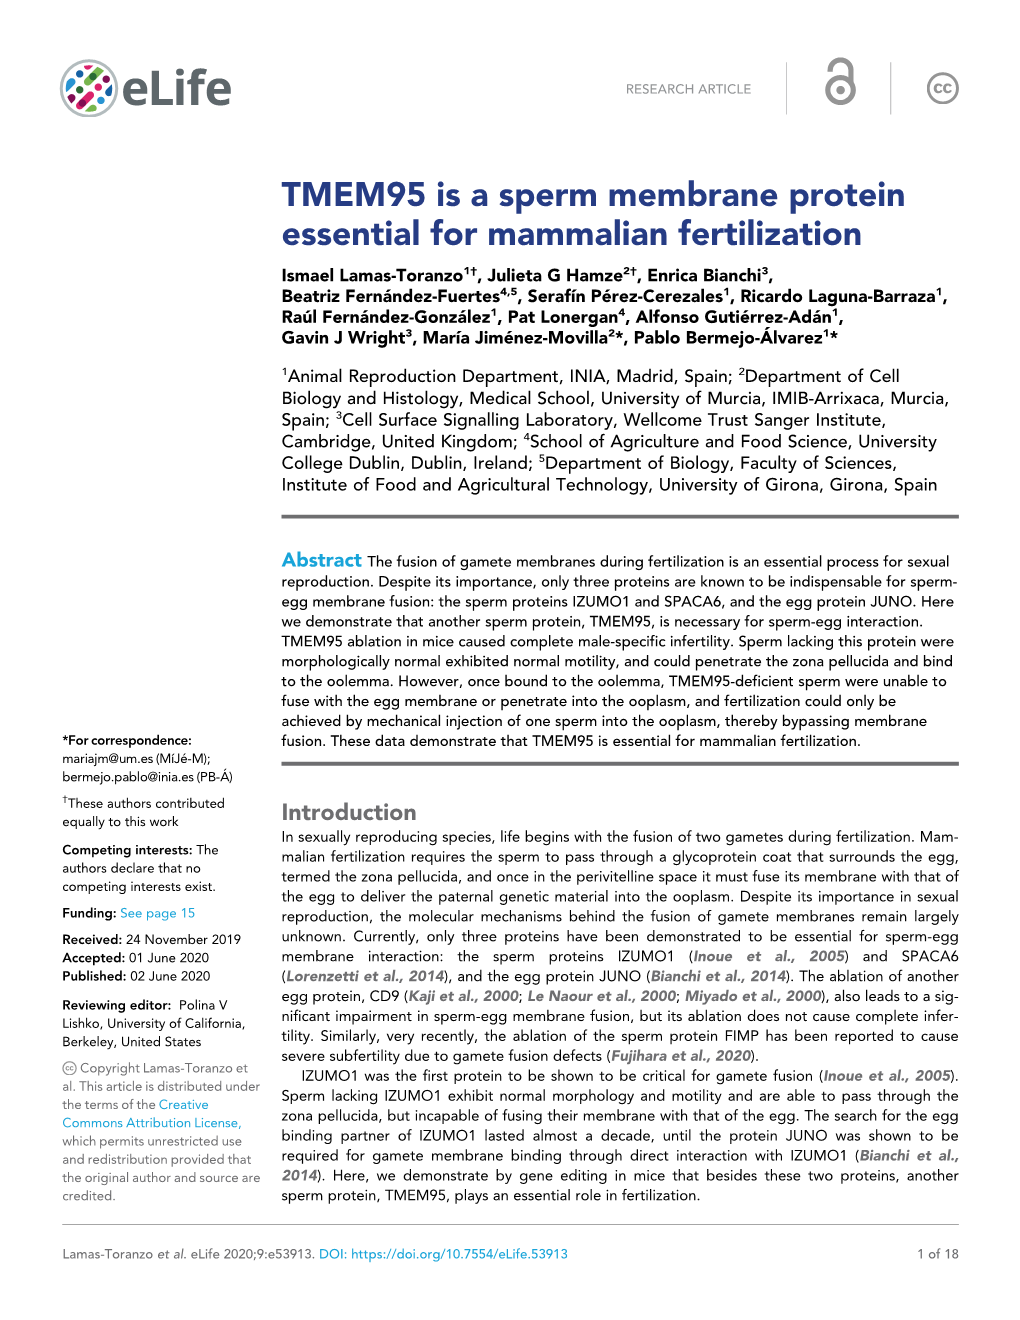 TMEM95 Is a Sperm Membrane Protein Essential for Mammalian